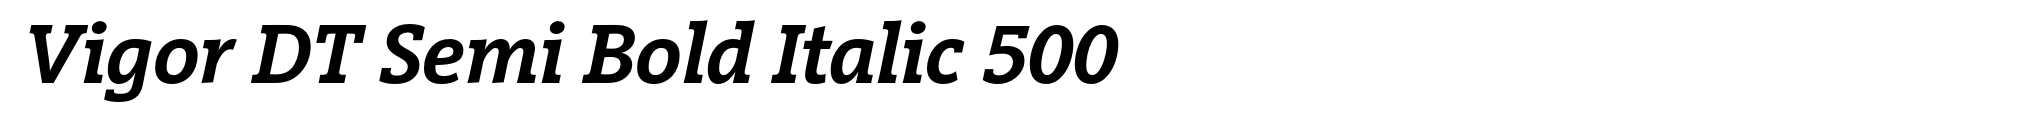 Vigor DT Semi Bold Italic 500 image